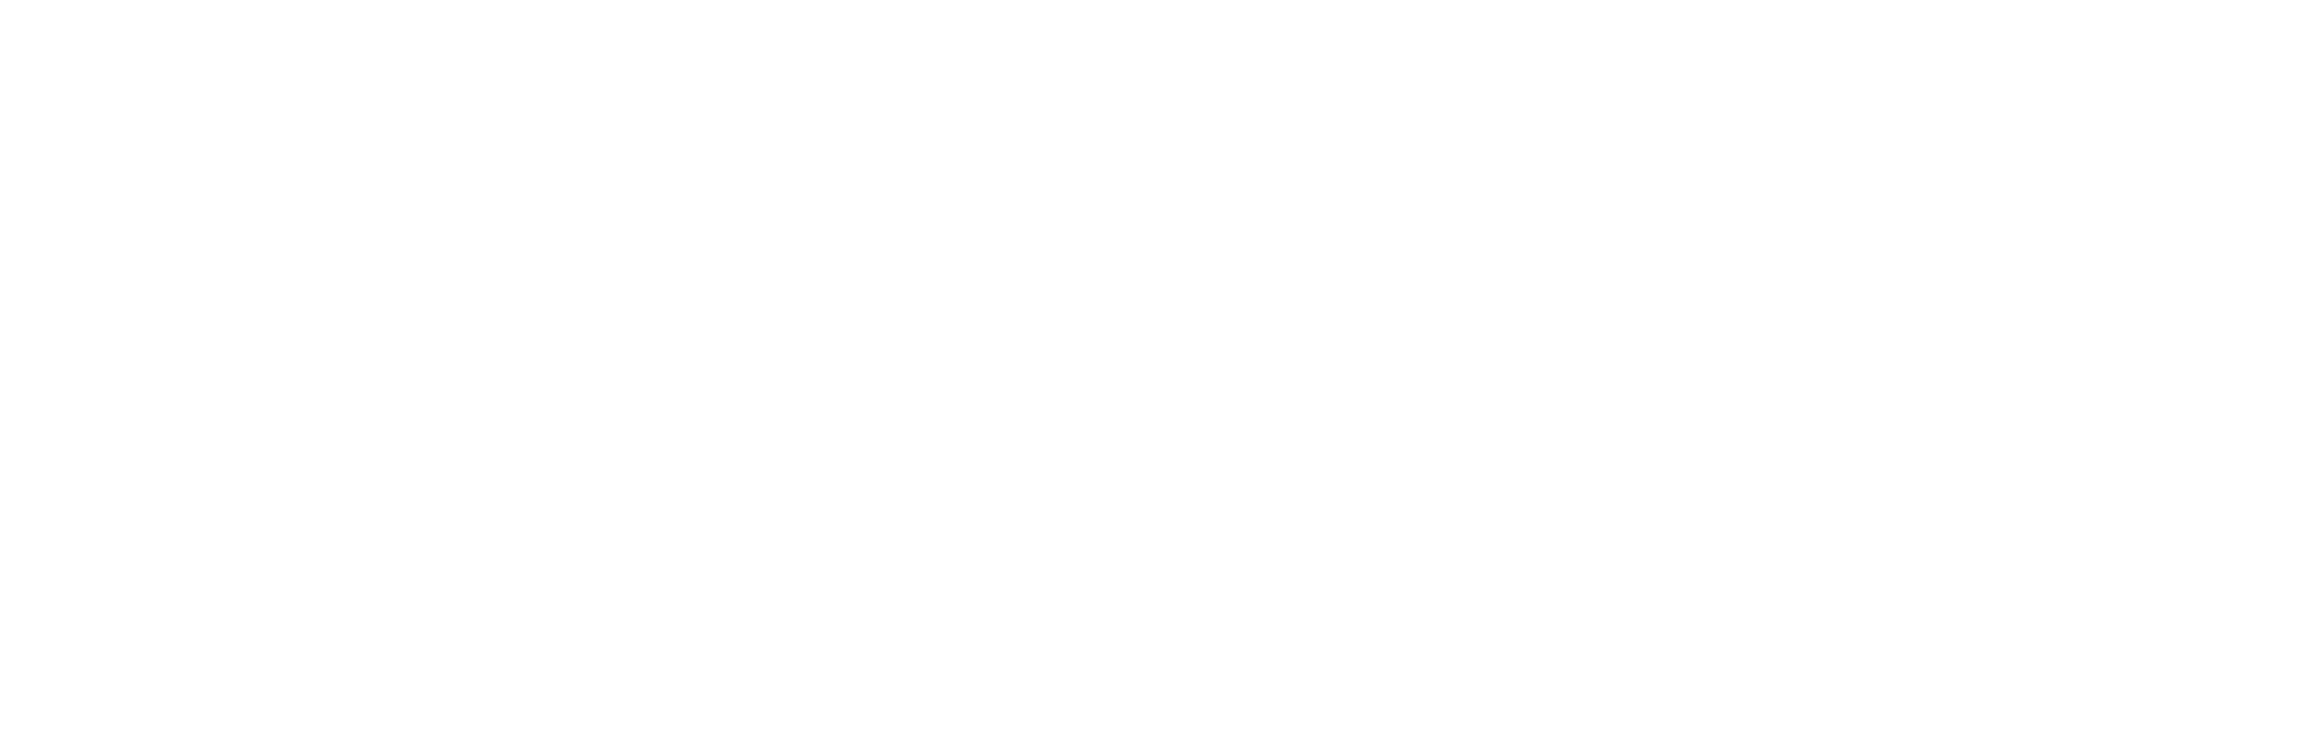 E-Street media-logo white